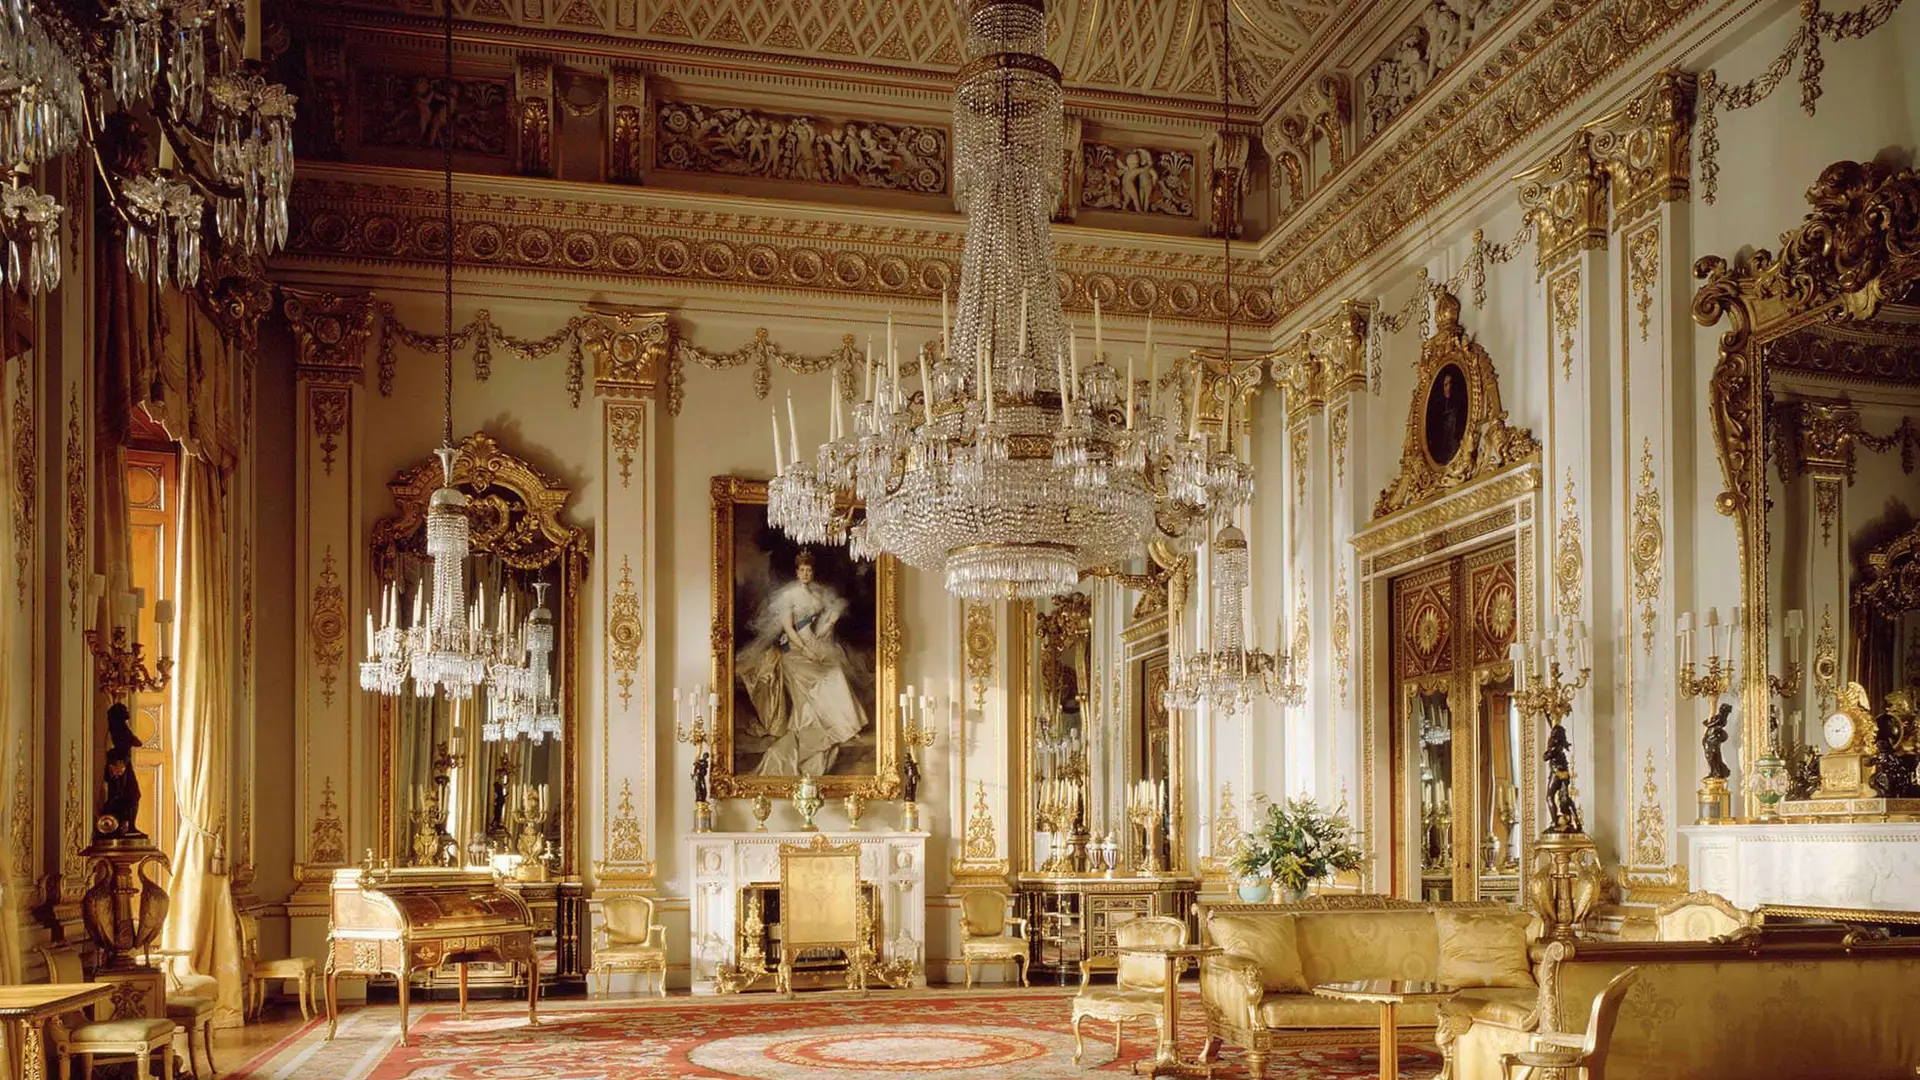 Inside view of Buckingham Palace 